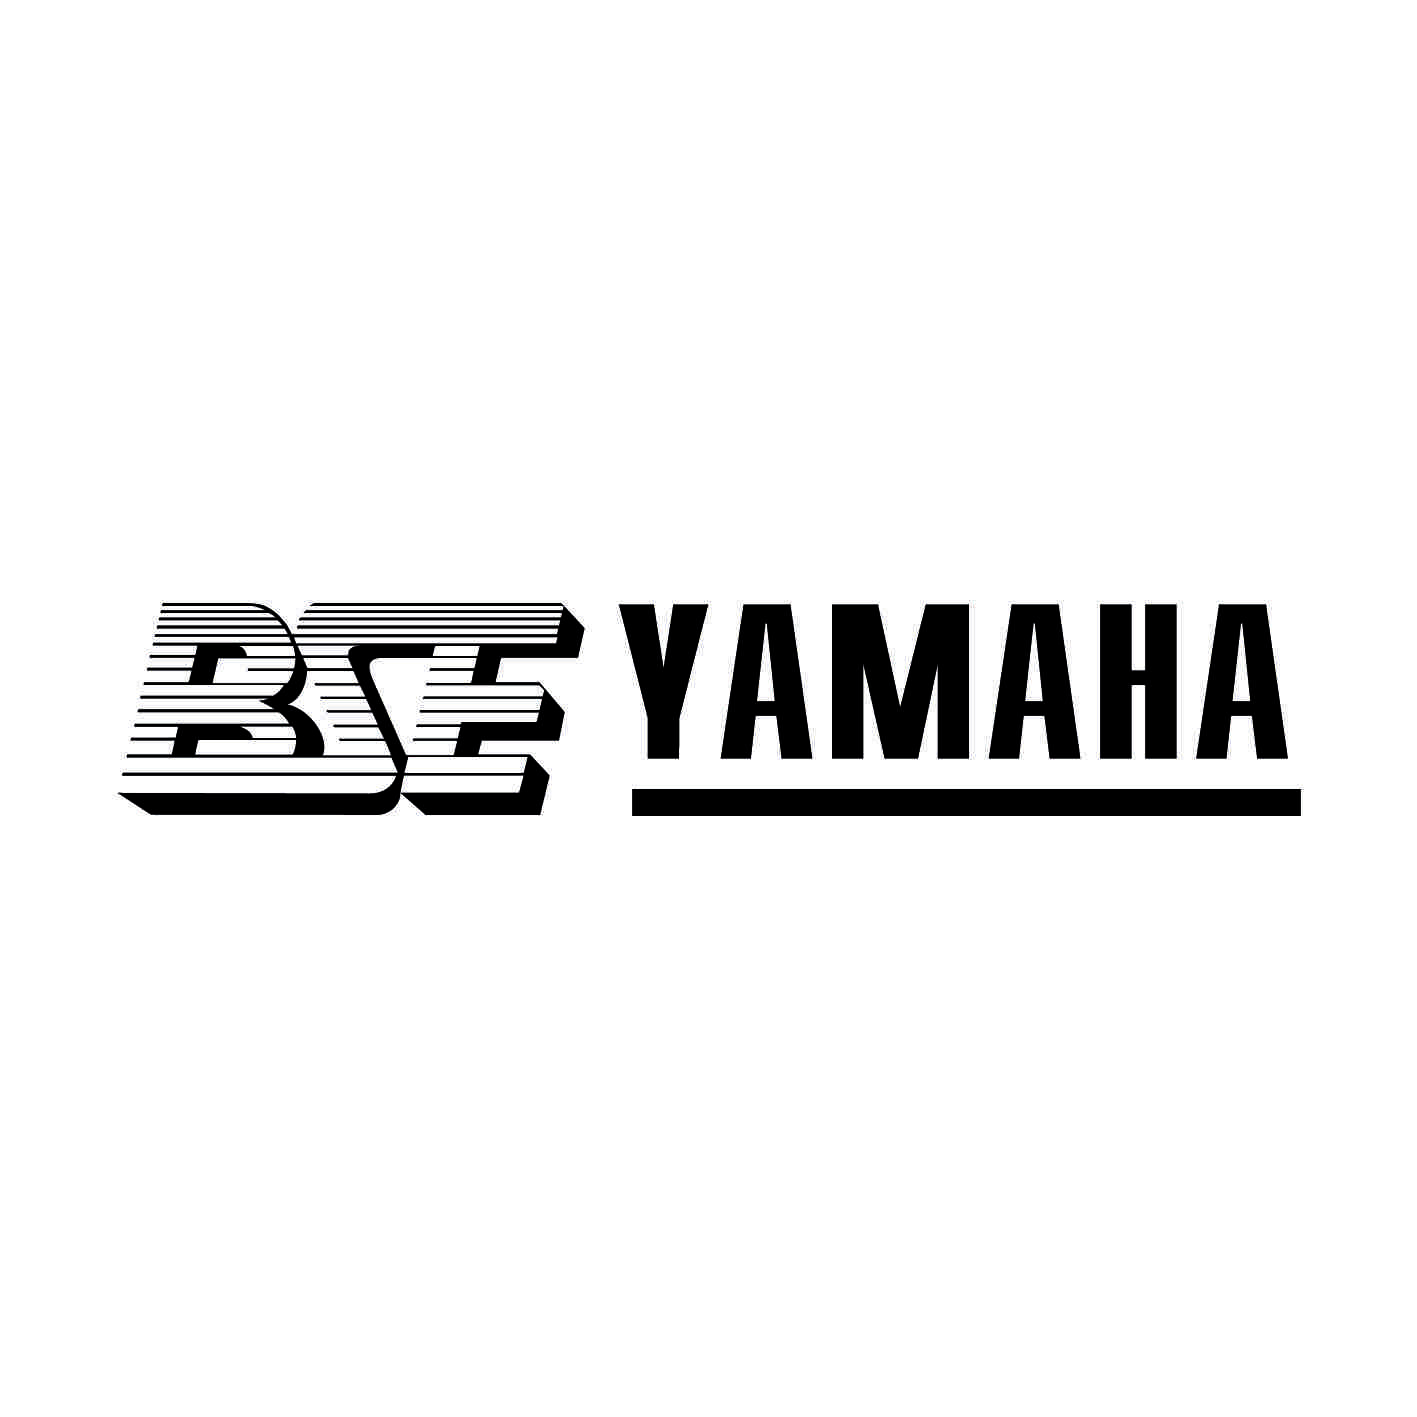 yamaha-ref13-bse-stickers-moto-casque-scooter-sticker-autocollant-adhesifs